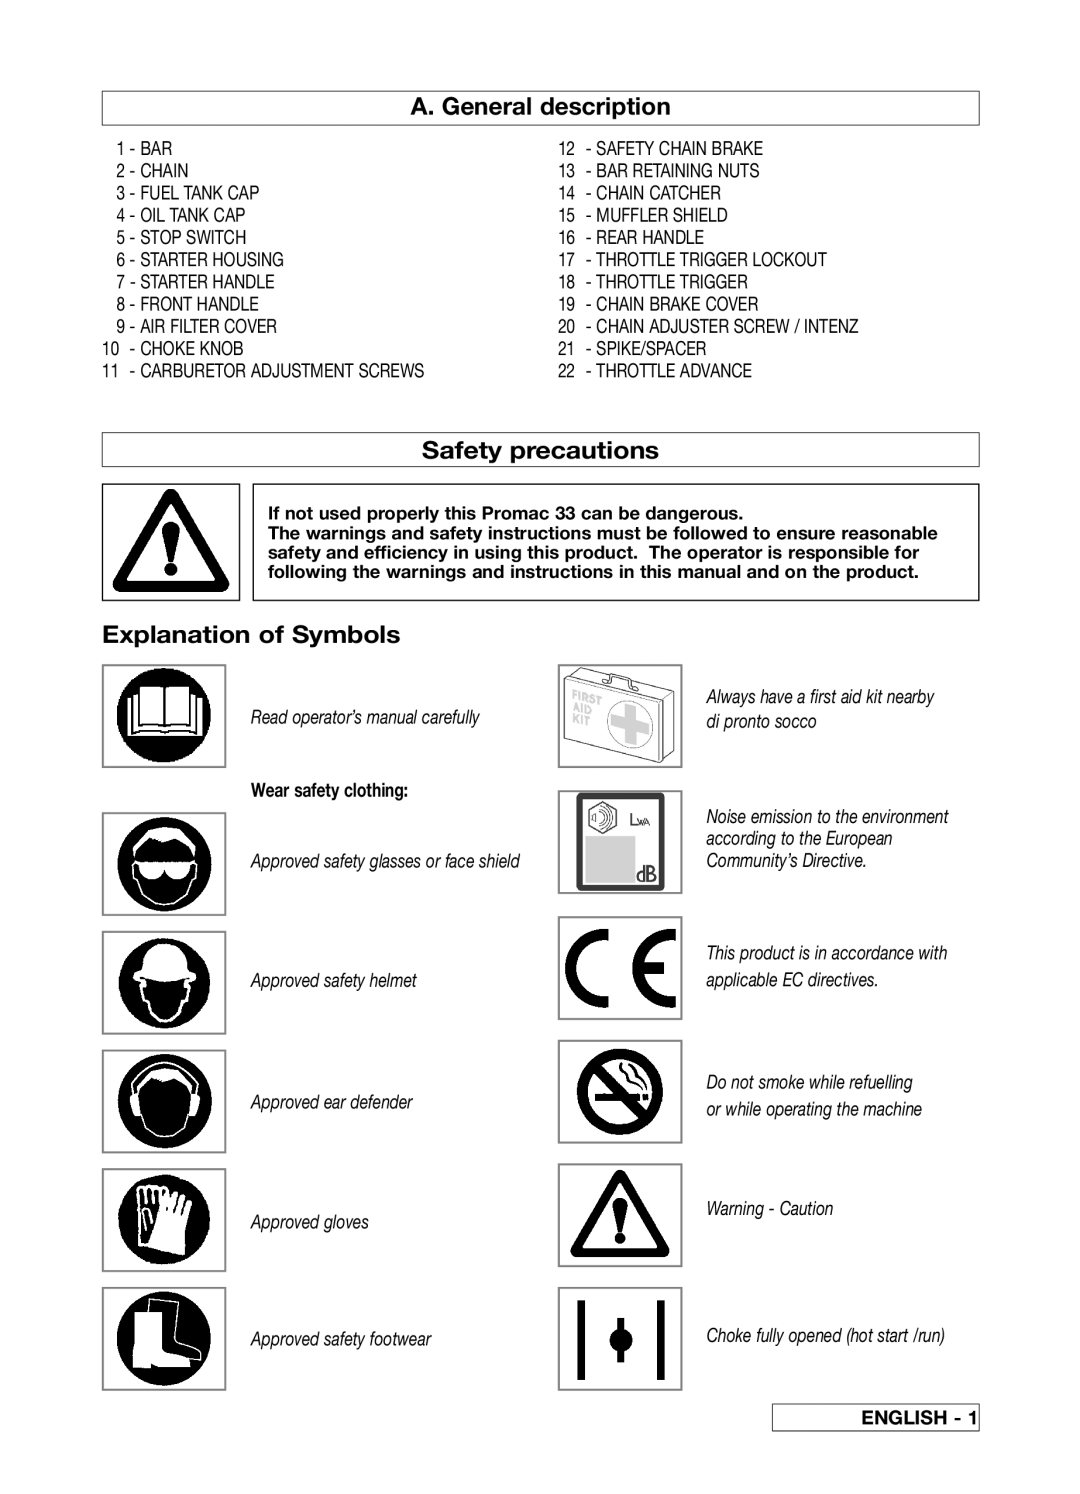 McCulloch 33 A. General description, Safety precautions, Explanation of Symbols, Read operator’s manual carefully, English 